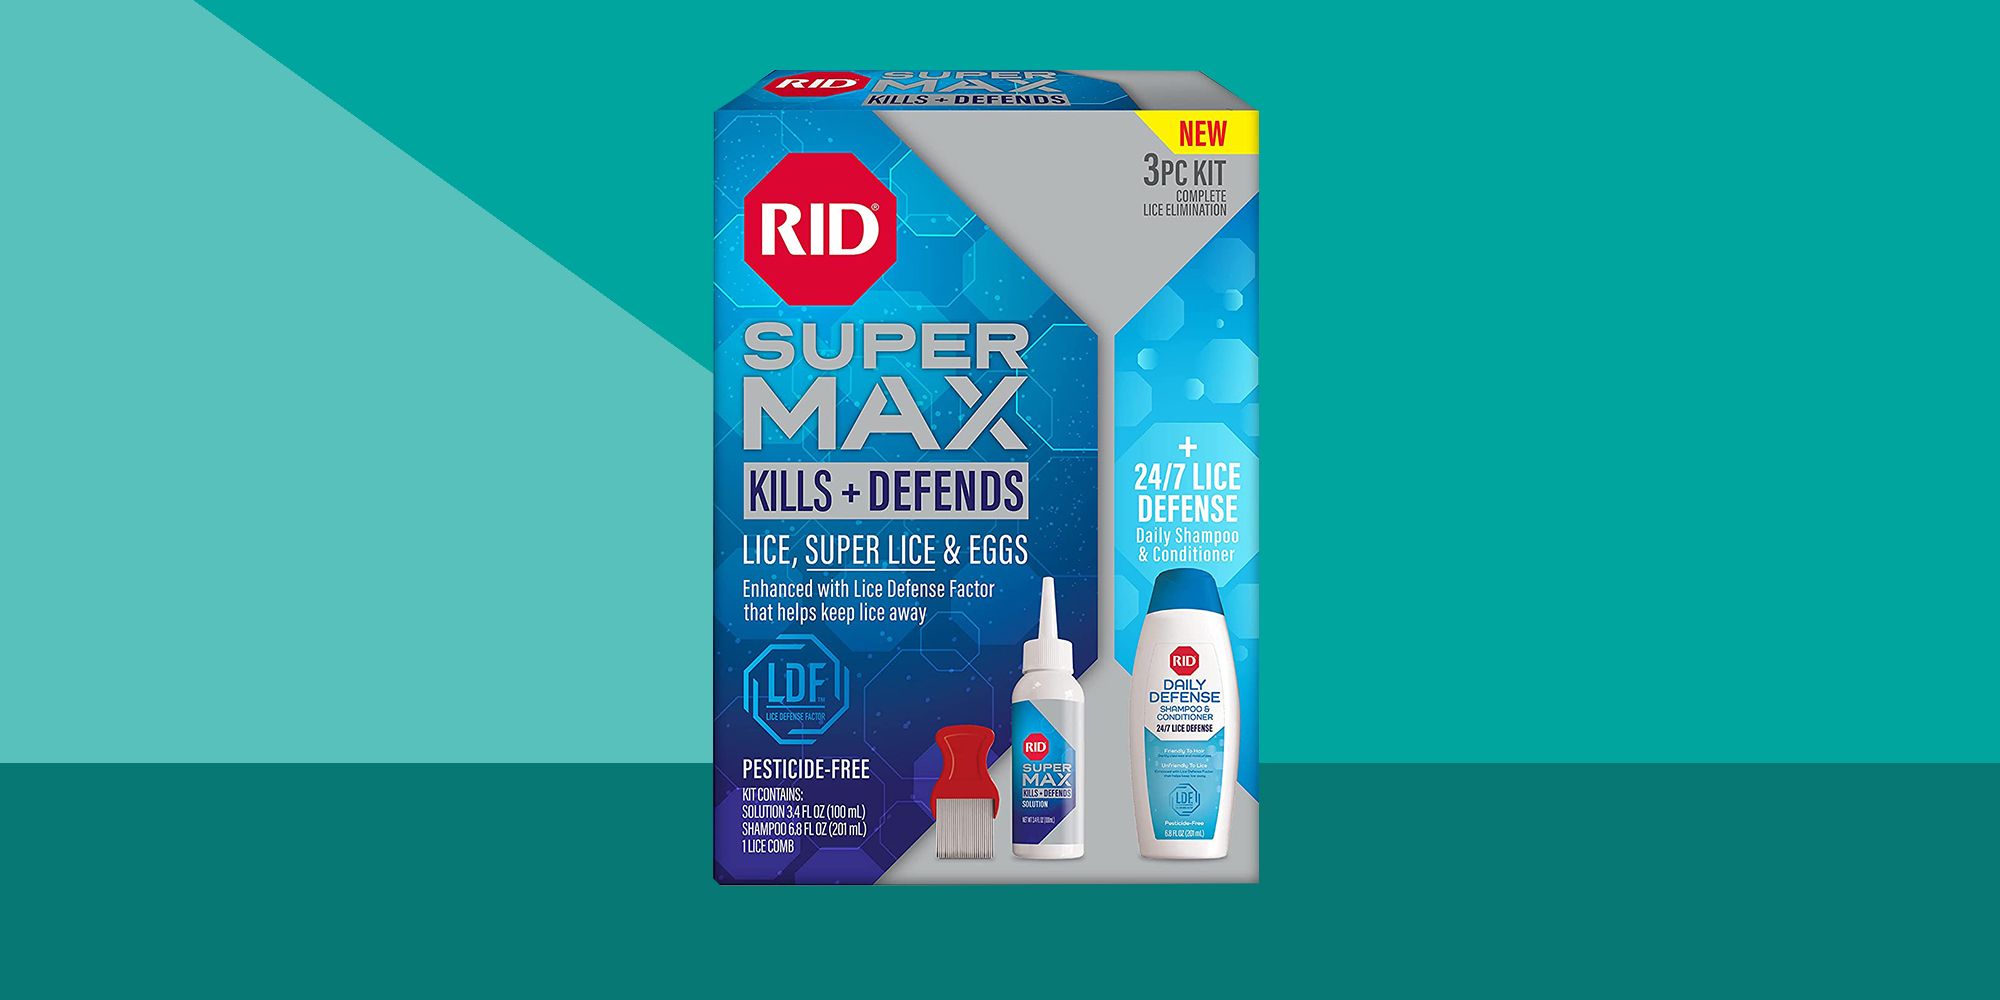 Vamousse Lice Defense Daily Shampoo, Super Lice Killing and Prevention, 10  fl. oz. 